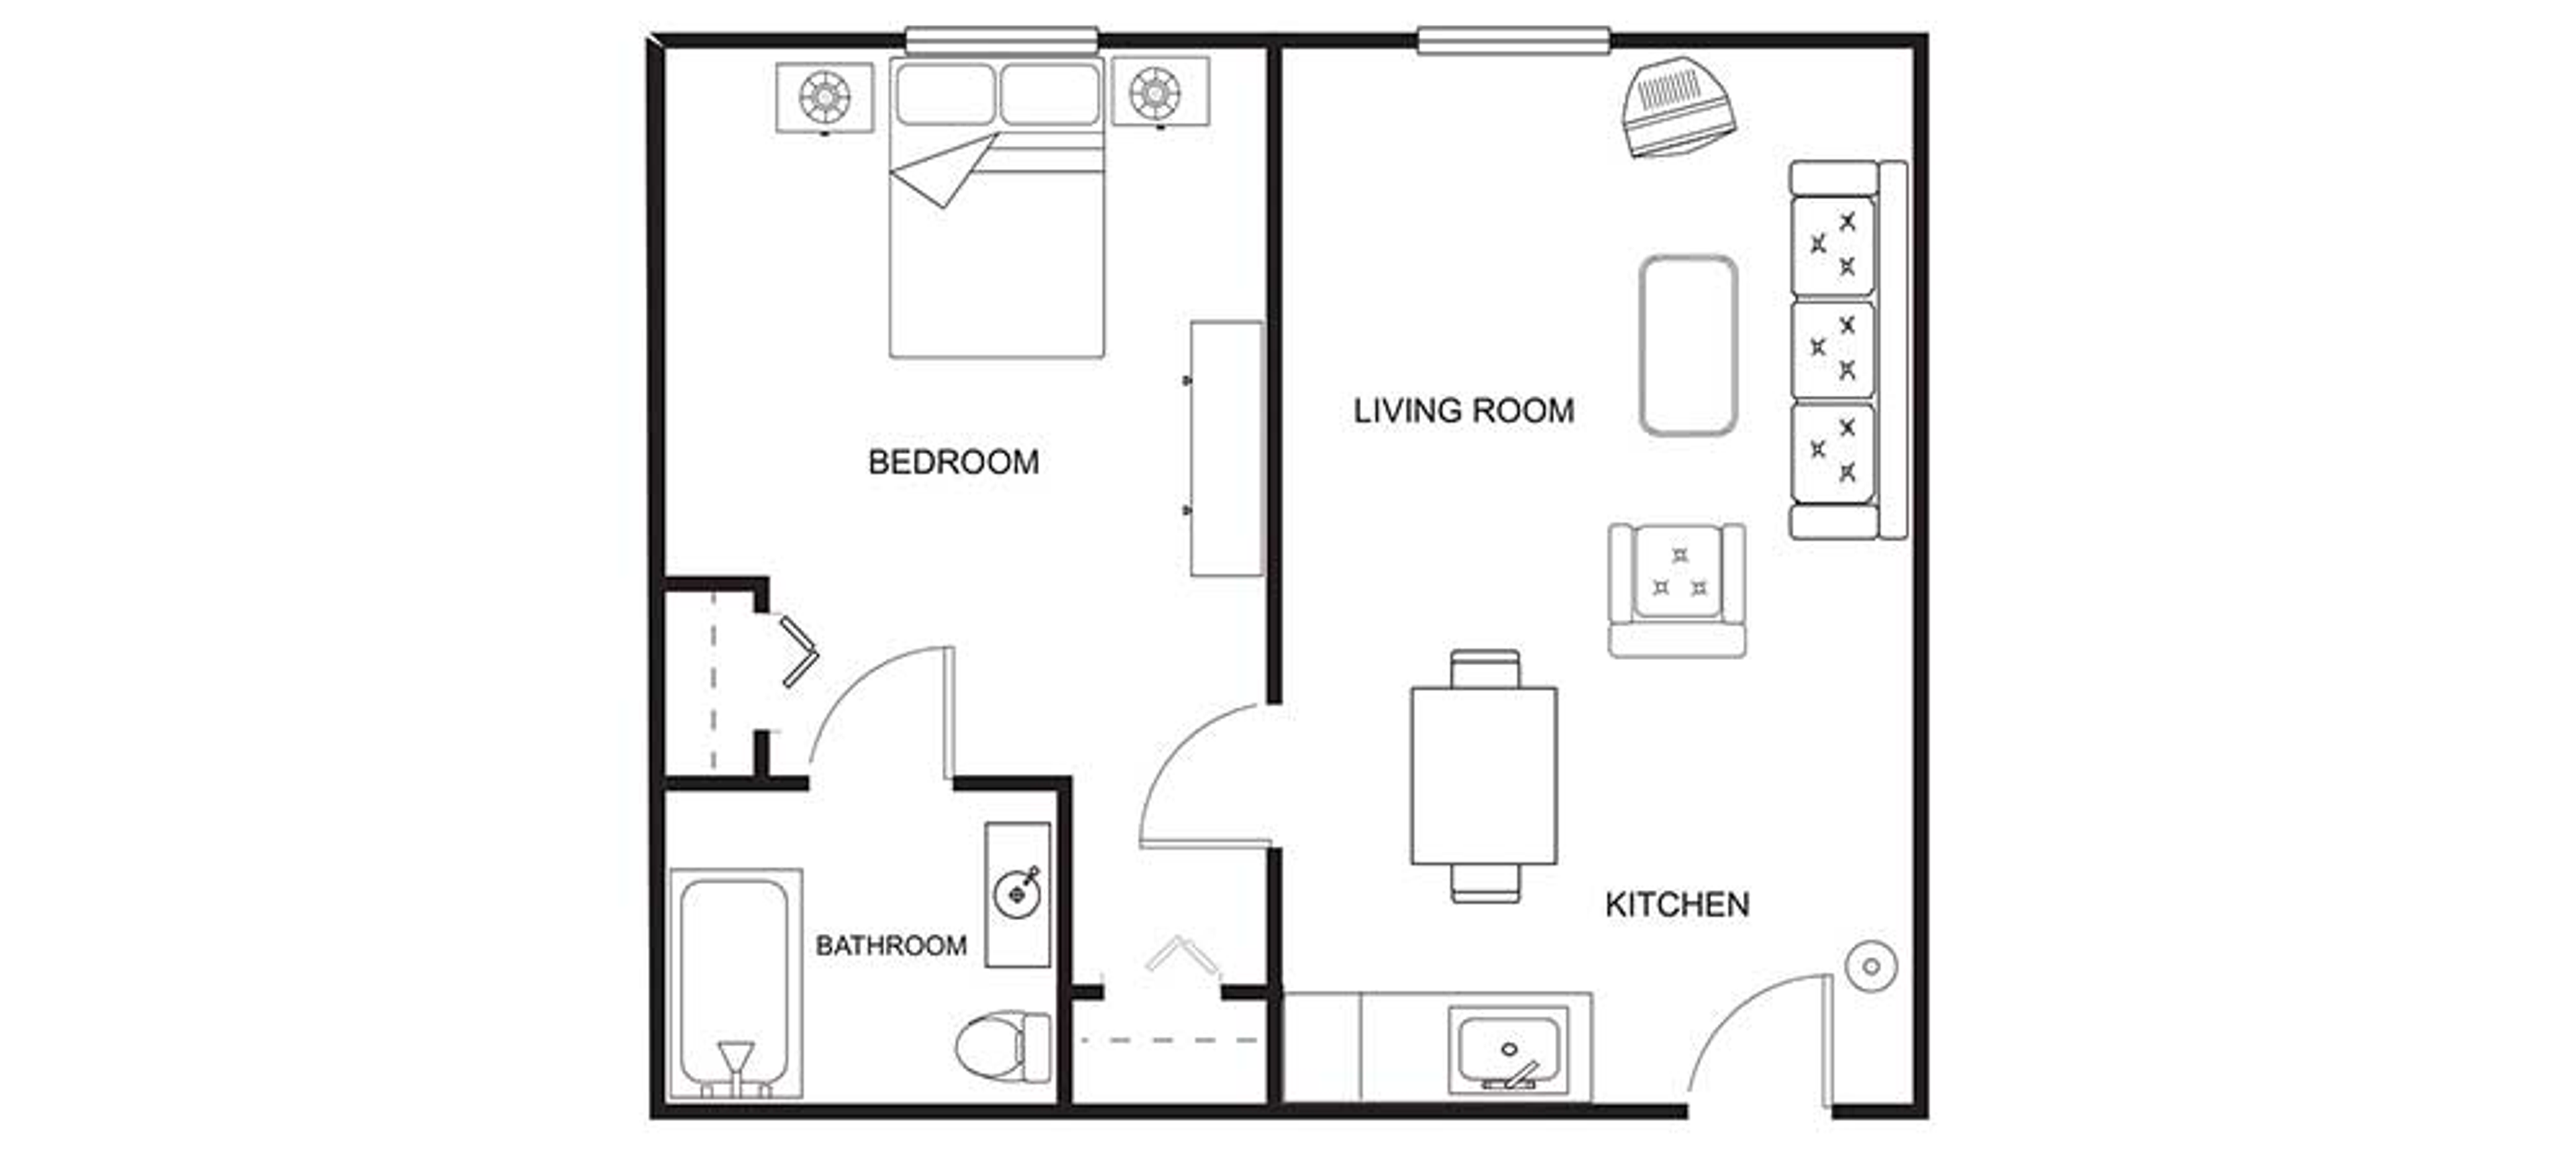 Floorplan - Bay Side Terrace - 1B 1B B2 Assisted Living